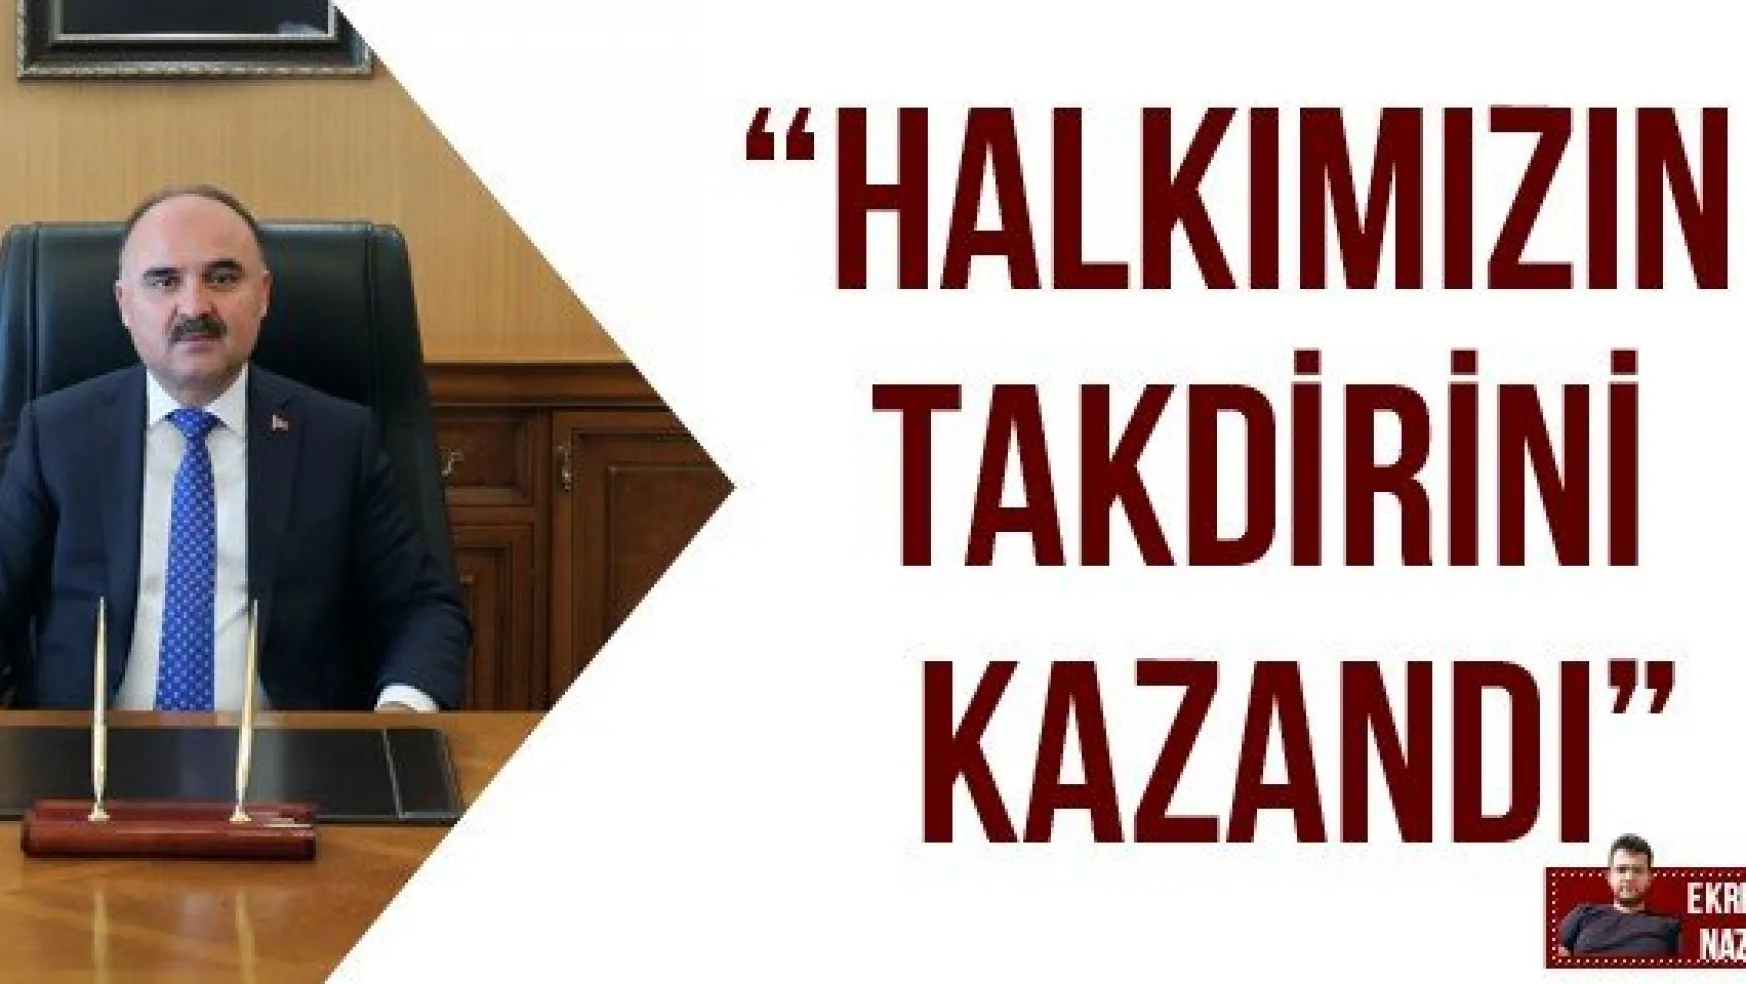 'HALKIMIZIN TAKDİRİNİ KAZANDI'